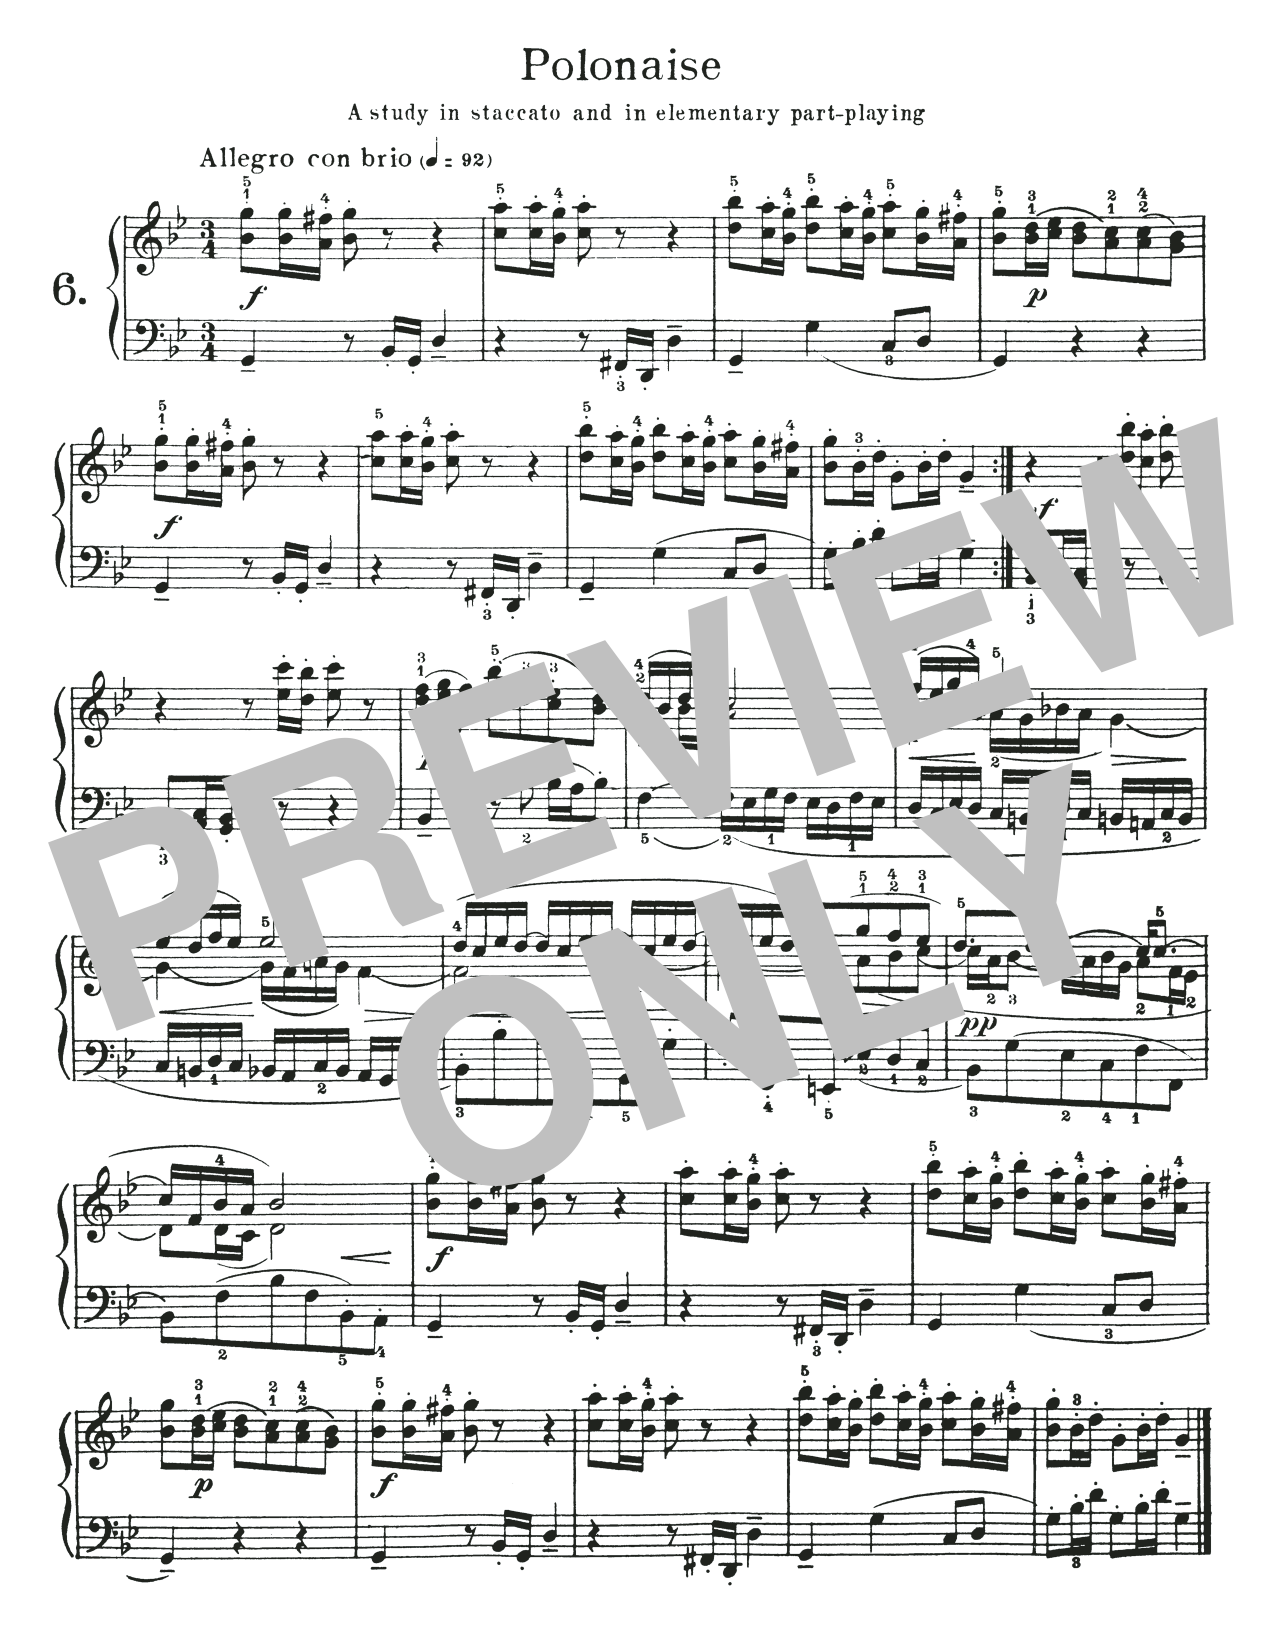 Johann Sebastian Bach Polonaise In G Minor, BWV App 123 Sheet Music Notes & Chords for Piano Solo - Download or Print PDF